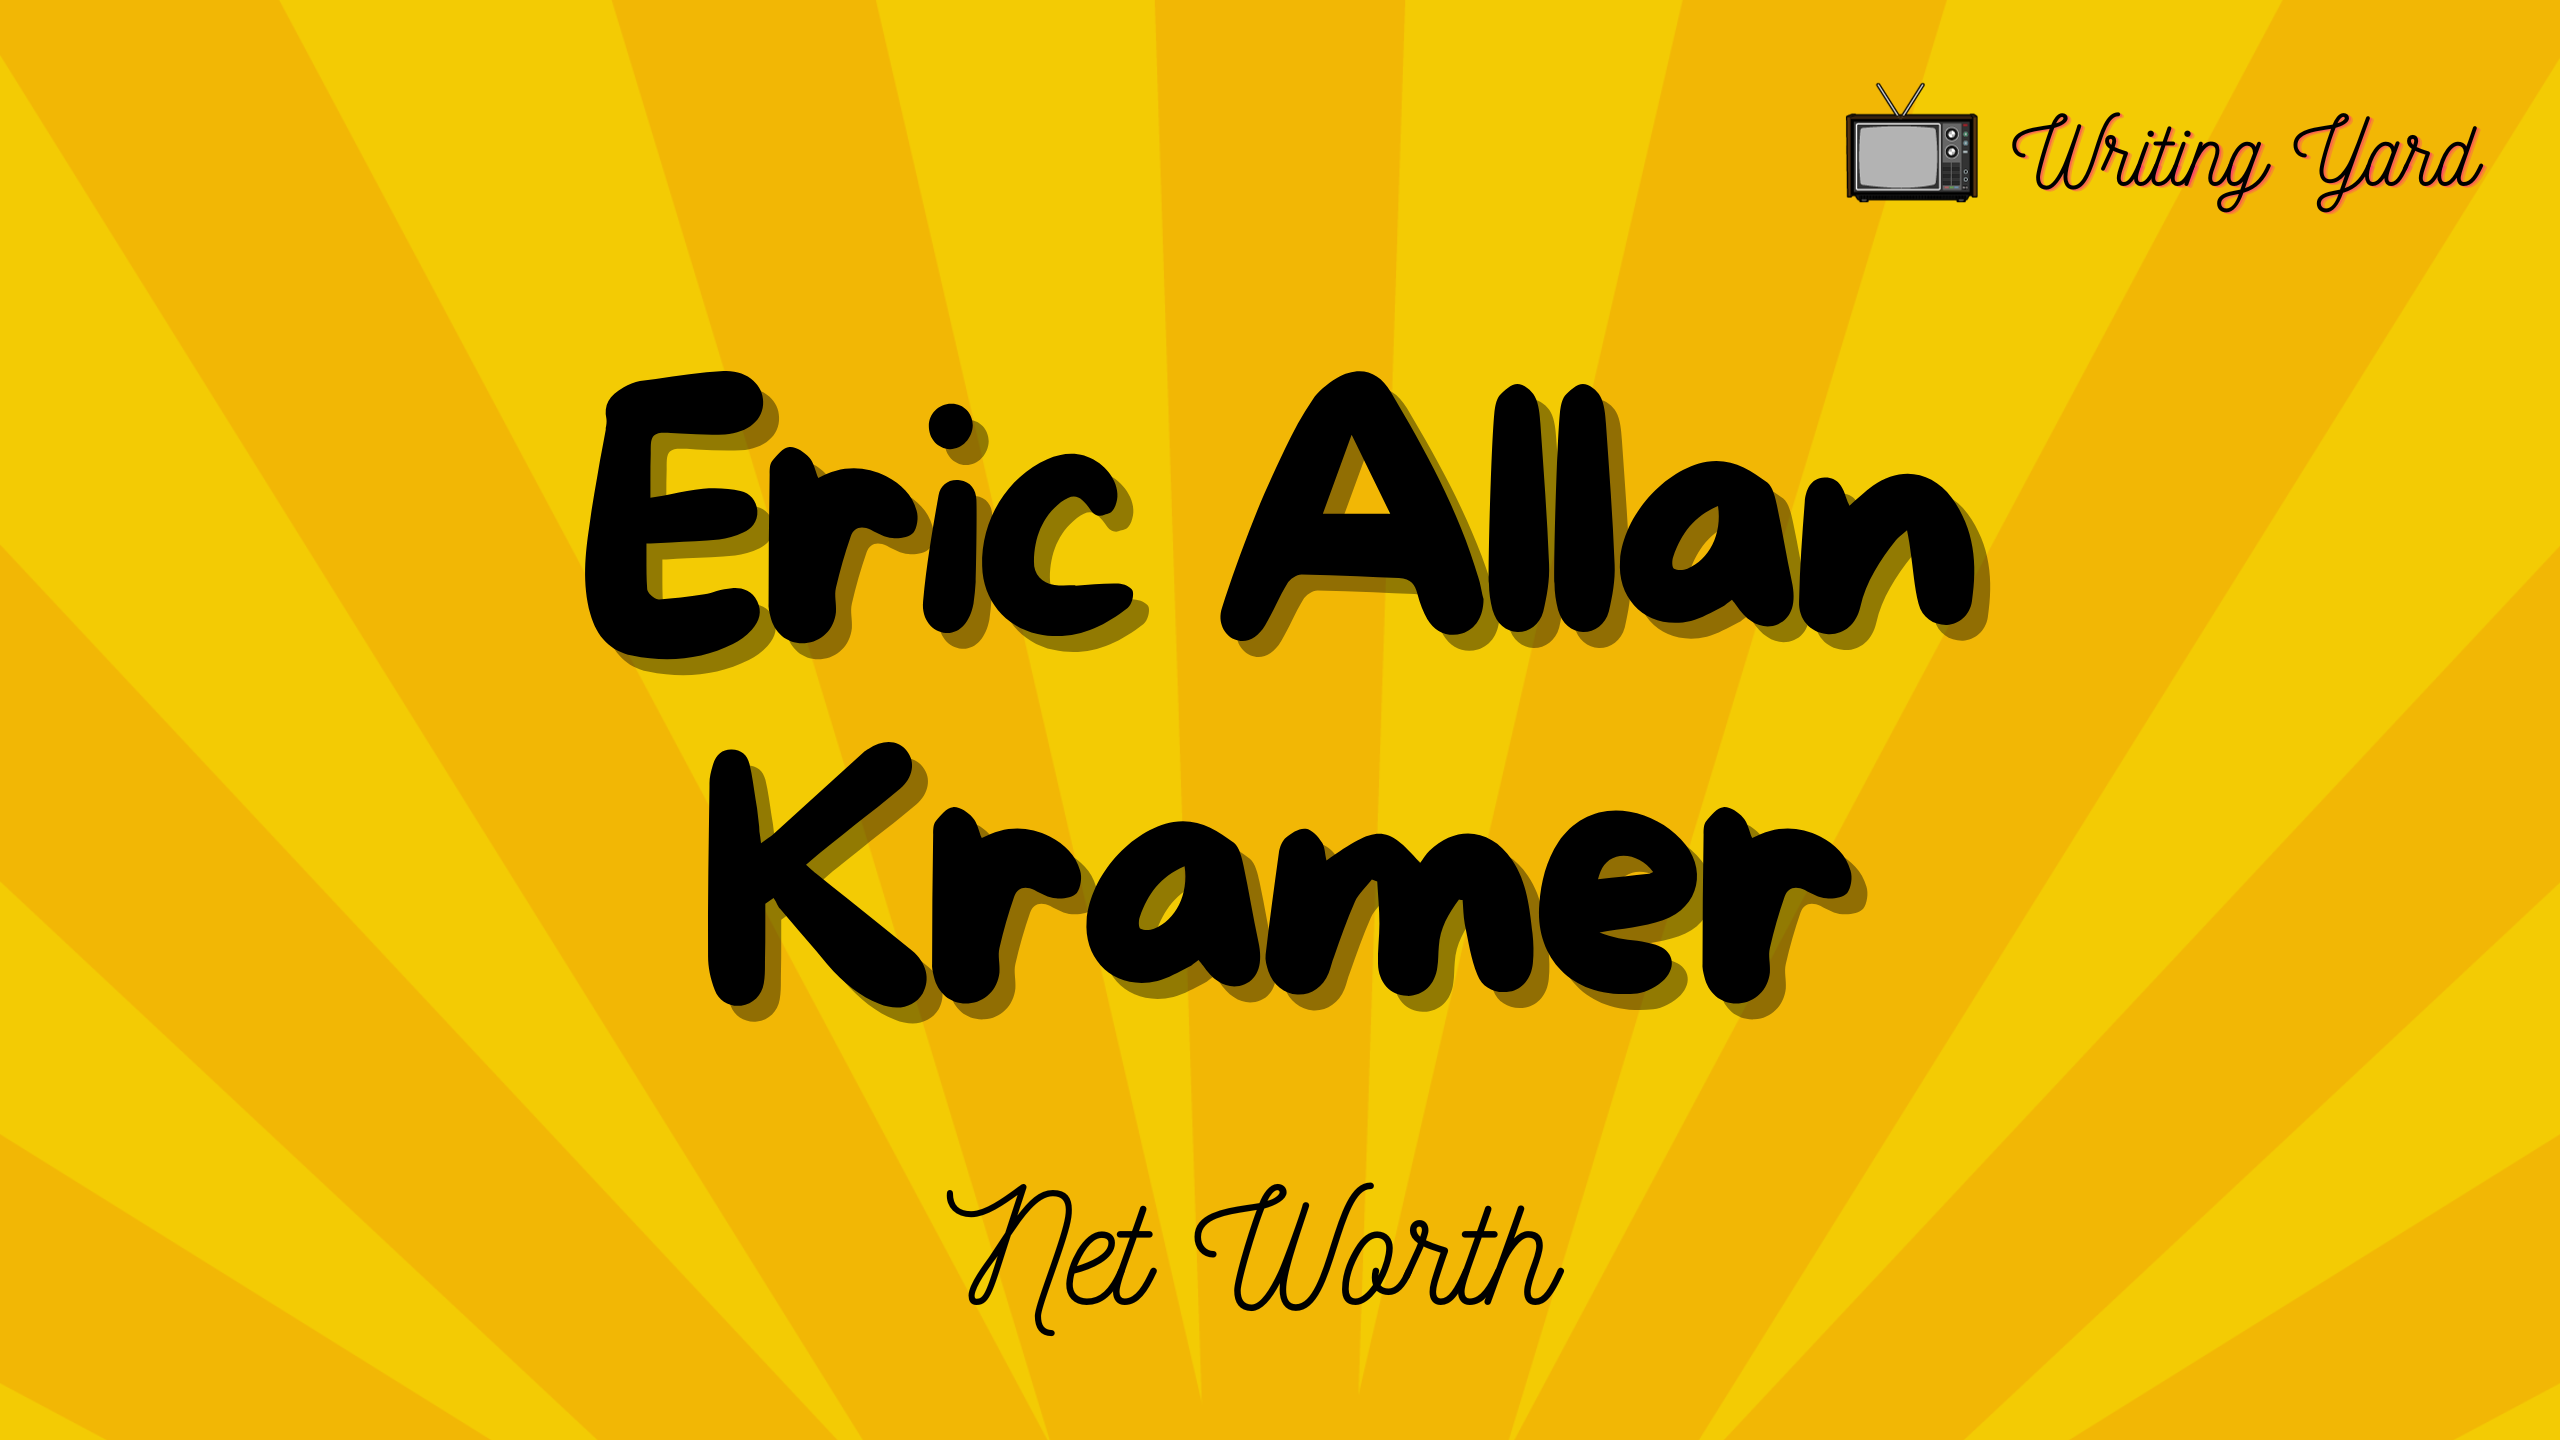 Eric Allan Kramer Net Worth